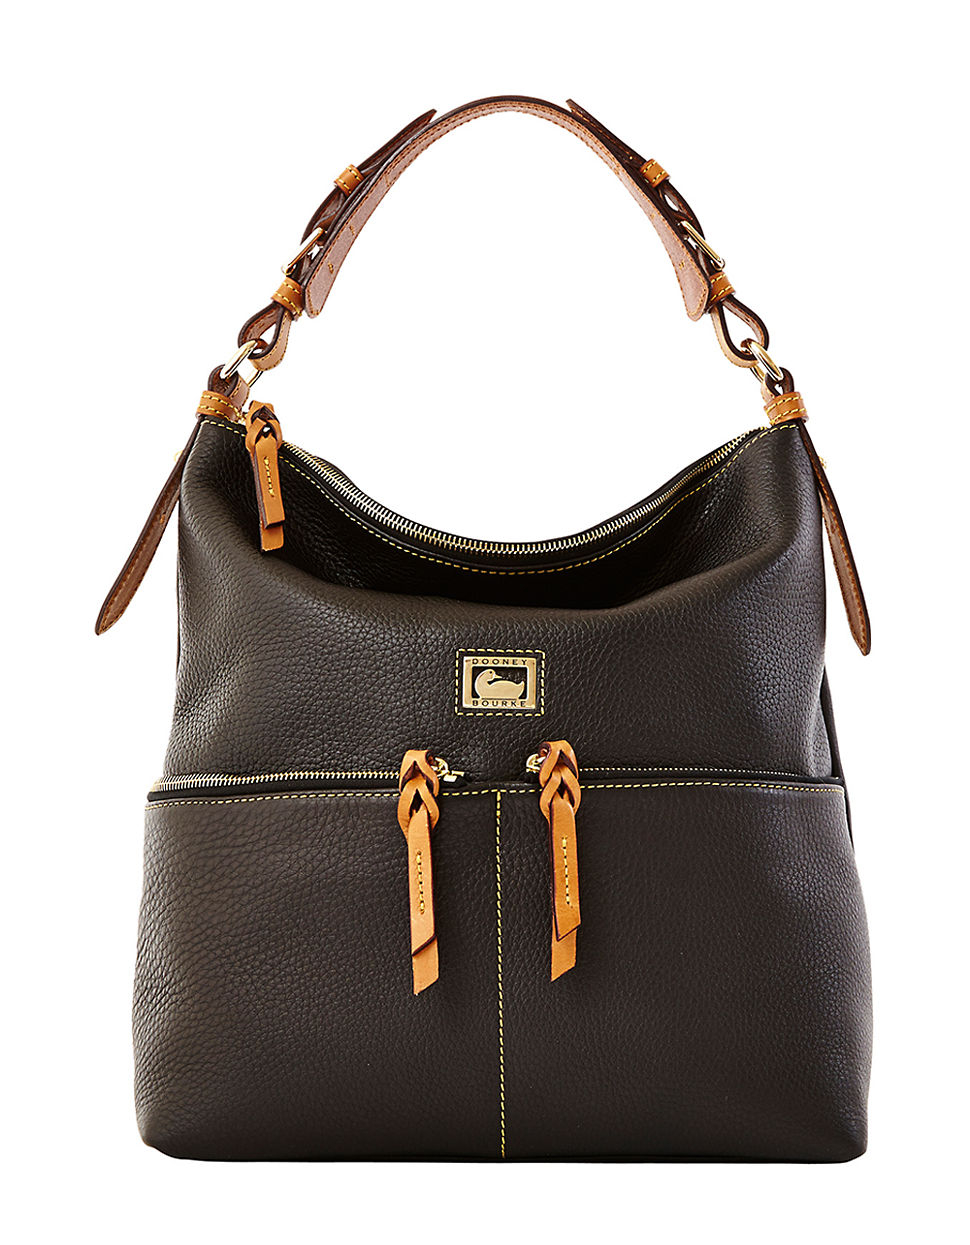 Lyst - Dooney & Bourke Dillen Ii Leather Zipper Pocket Sac Bag in Black